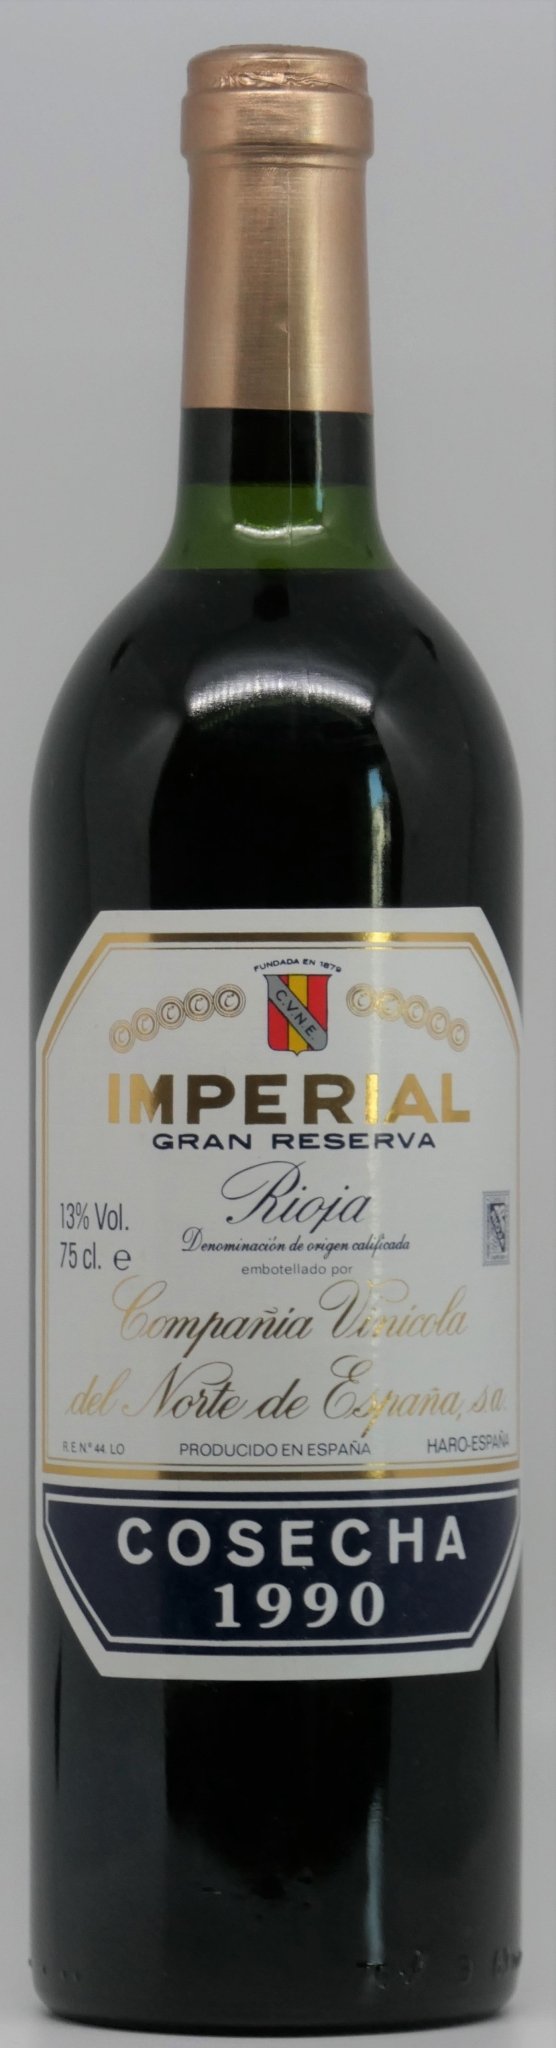 Cune (CVNE) Imperial Gran Reserva Rioja 1990 - The Spanish Table